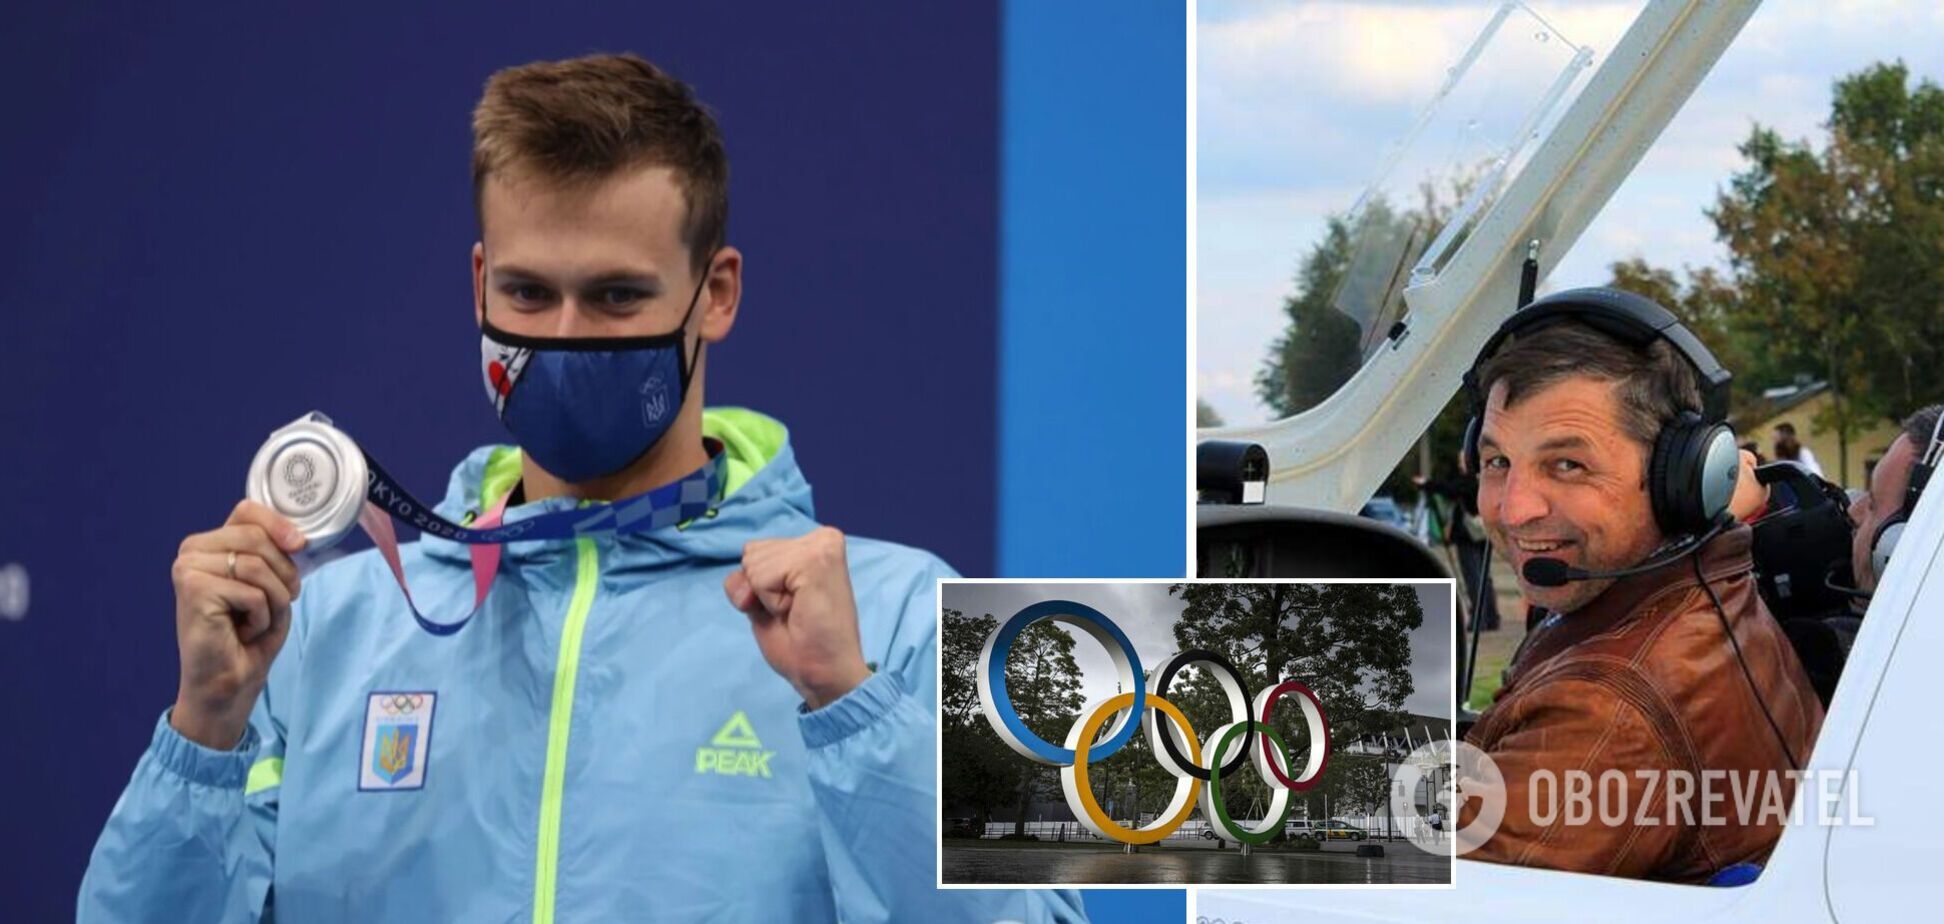 Новости Украины: Романчук завоевал 'серебро' на Олимпиаде, а родственники Табанюка назвали авиакатастрофу убийством